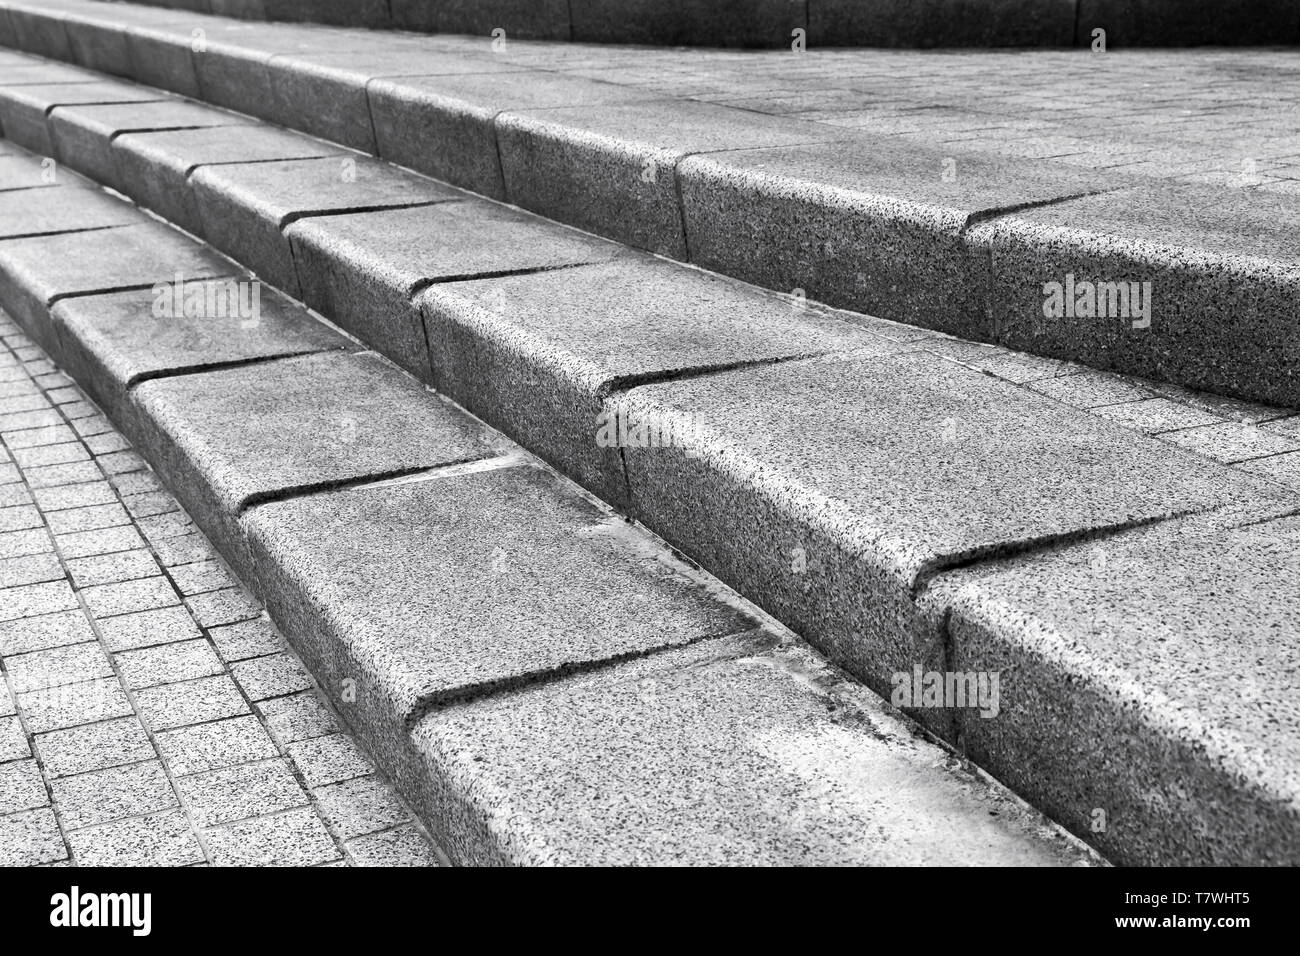 Abstract urban architectural fragment. Stairway made of dark gray granite stone Stock Photo